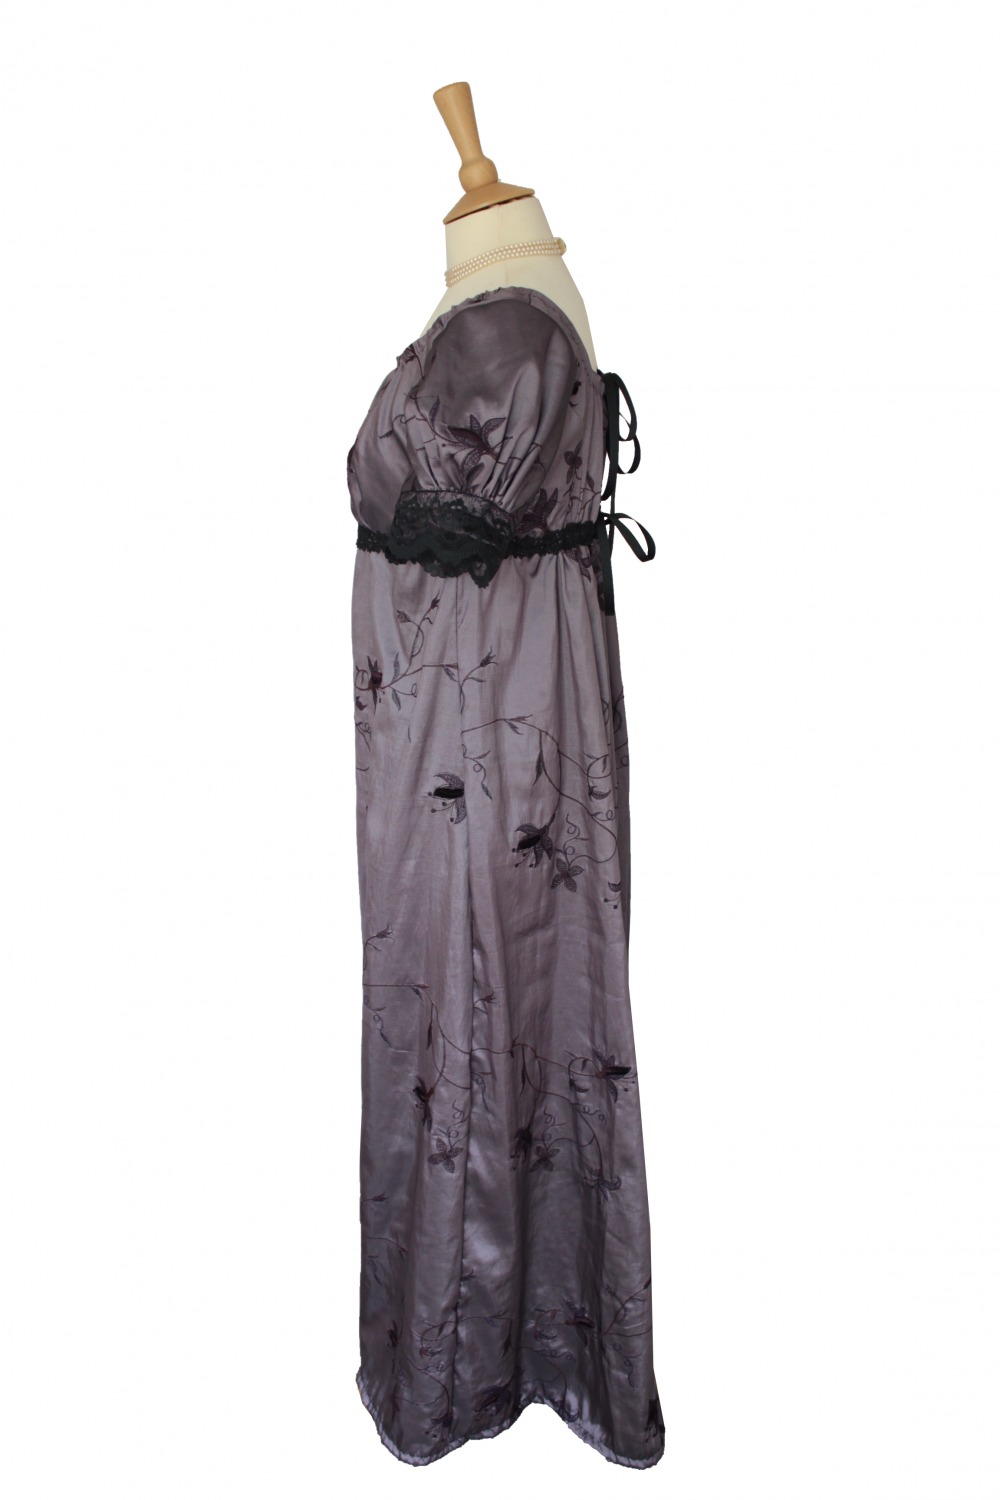 Ladies 18th 19th Regency Jane Austen Petite Costume Evening Ball Gown Size 12 - 14 Image